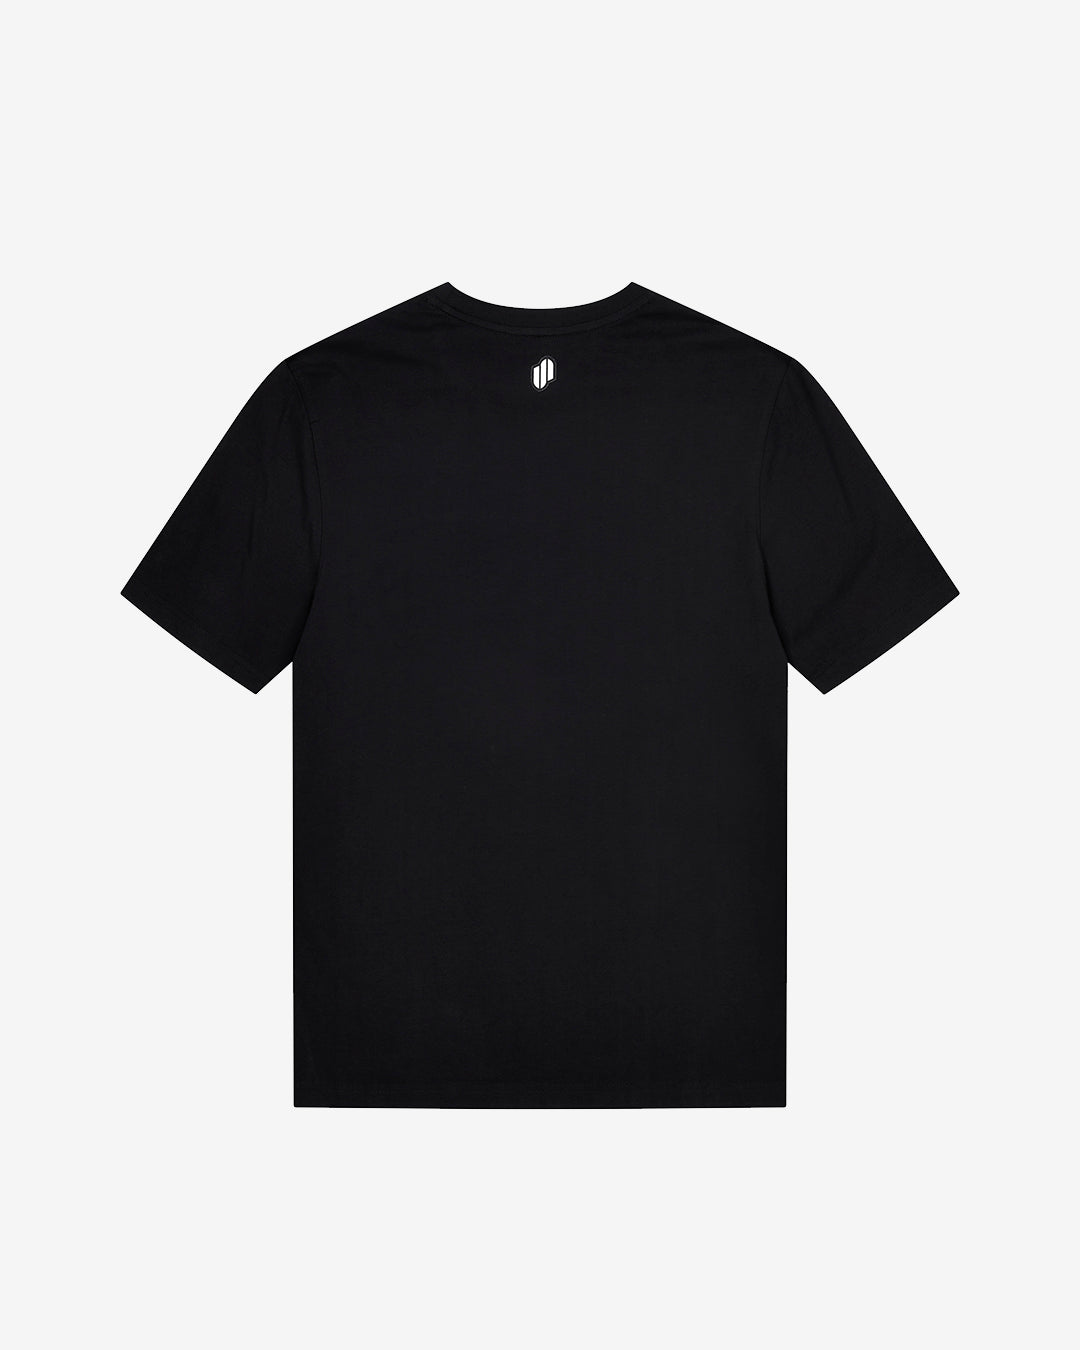 RT: 701-04 - Earth Dust Cotton T-Shirt - Black